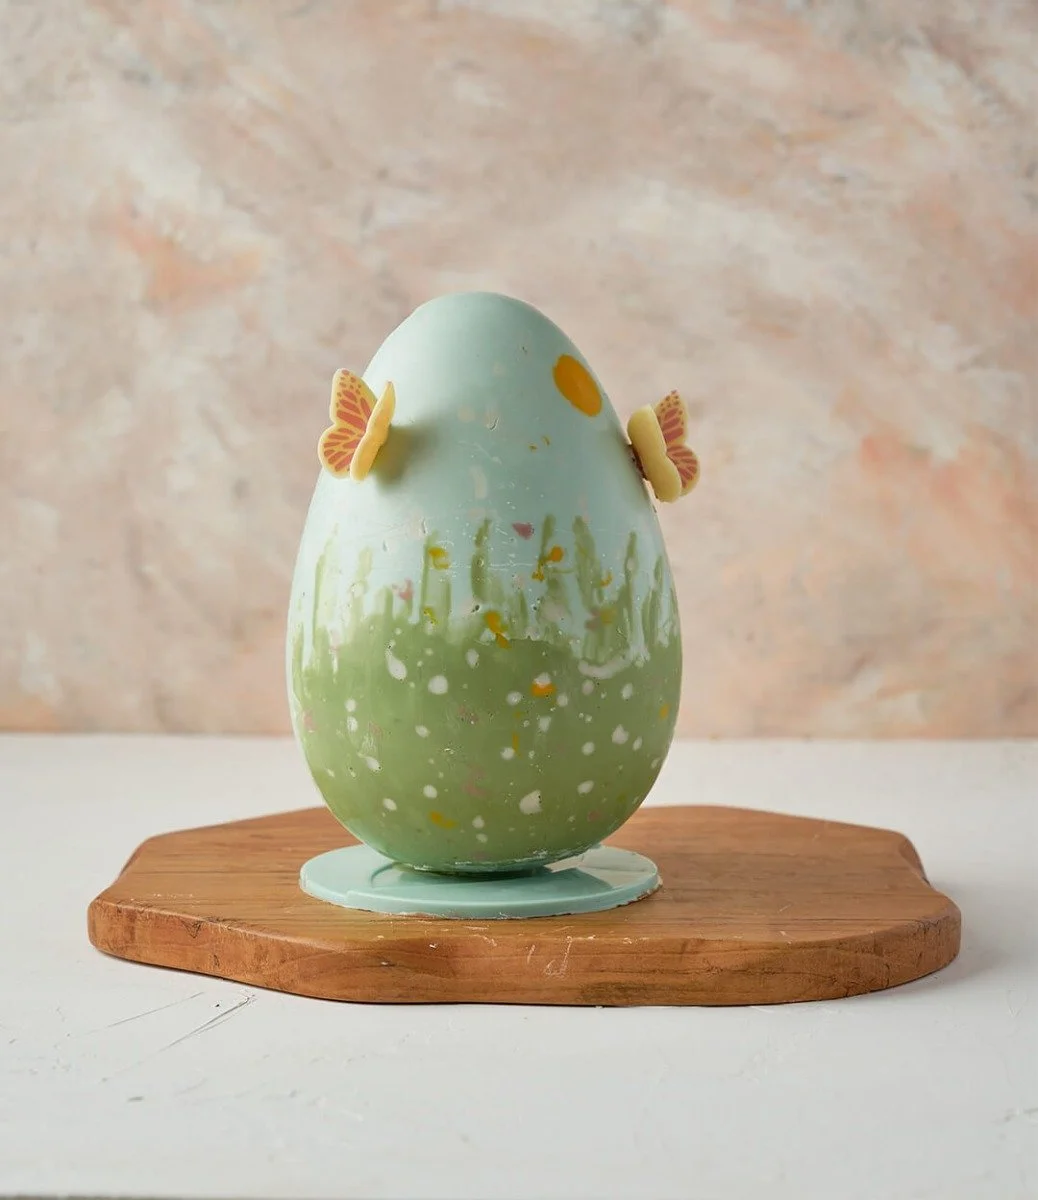 Hand Designed Easter Egg by NJD